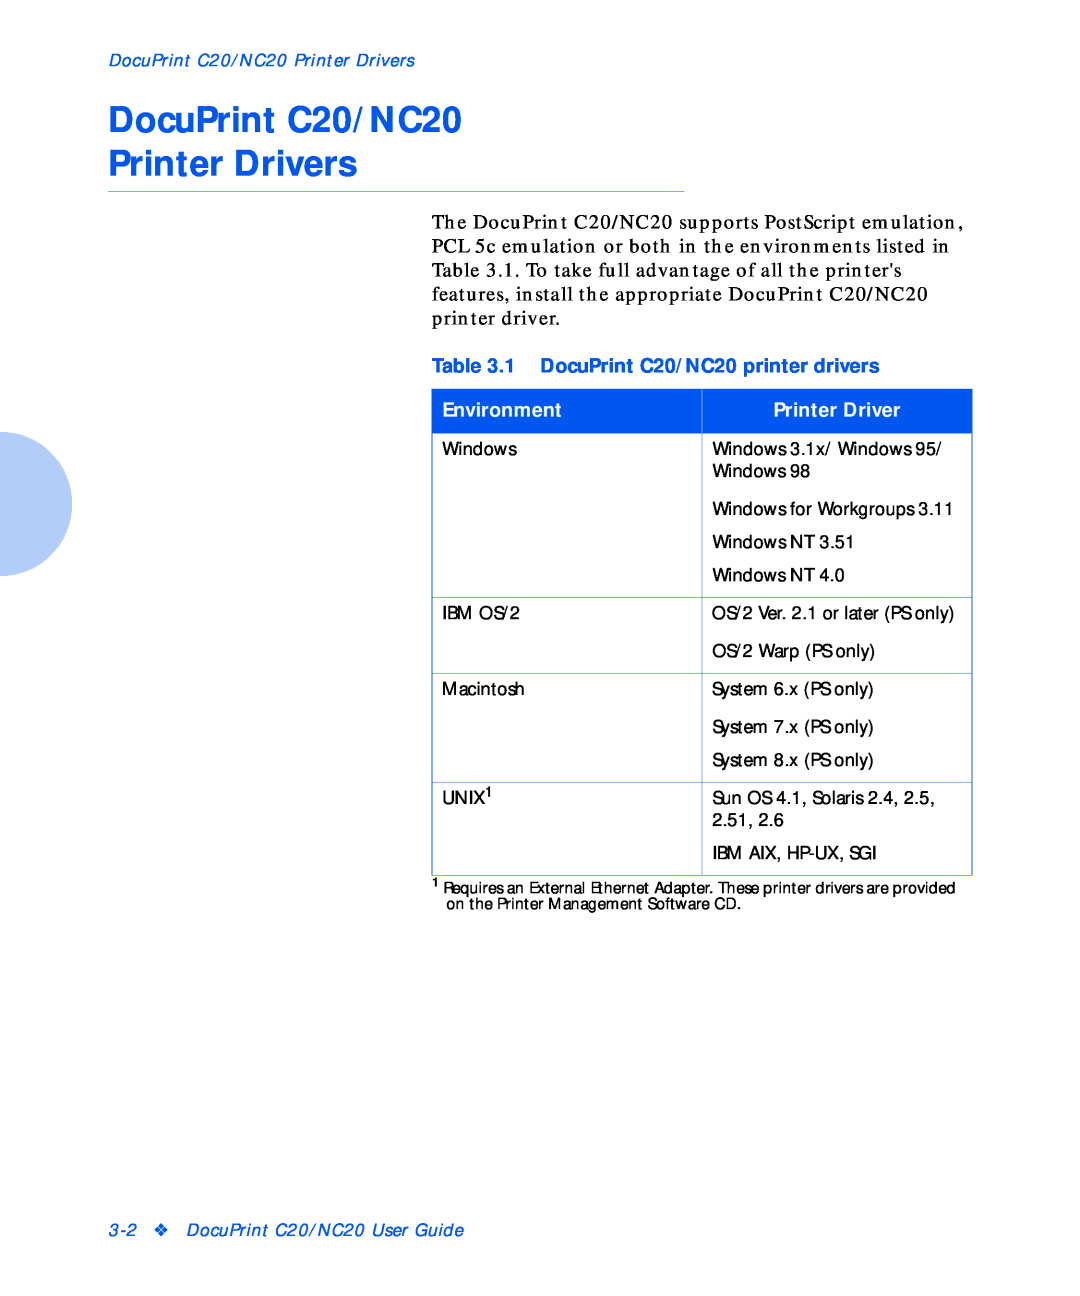 Xerox manual DocuPrint C20/NC20 Printer Drivers, 1 DocuPrint C20/NC20 printer drivers, Environment 